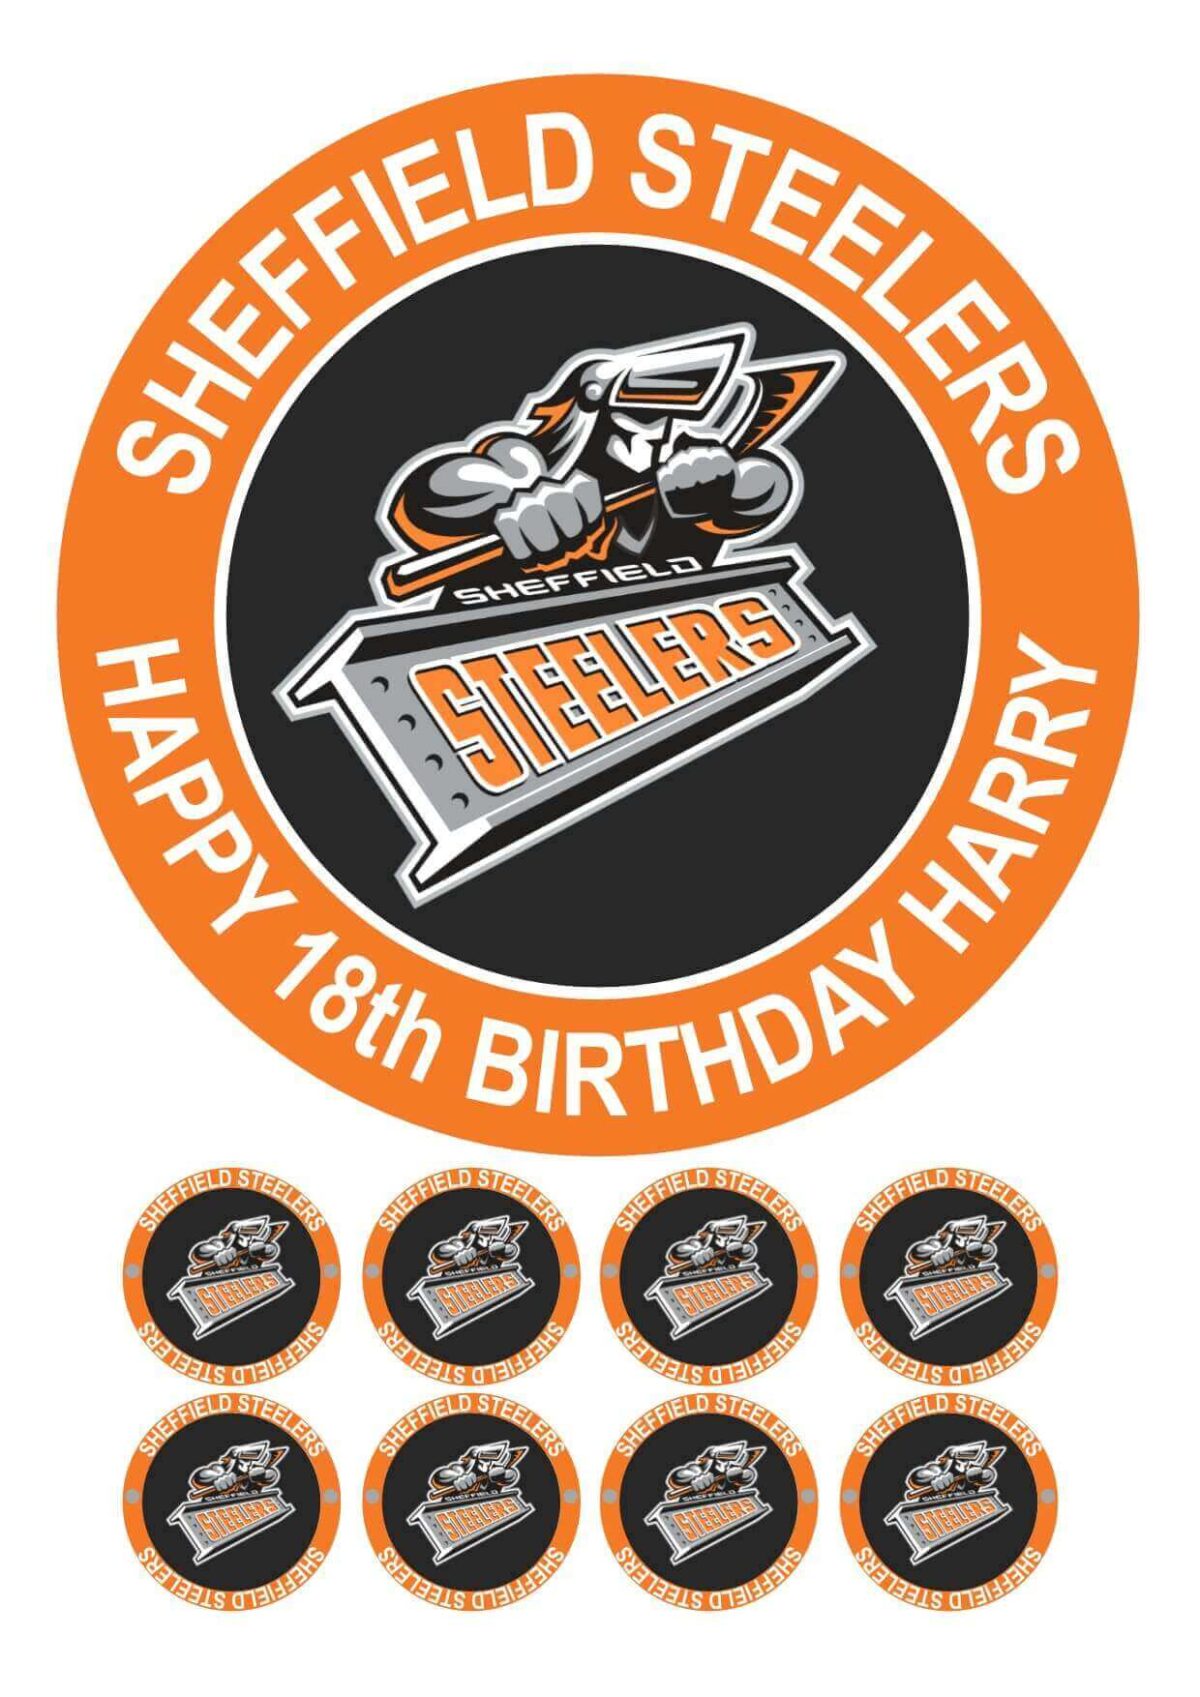 sheffield steelers birthday cake topper